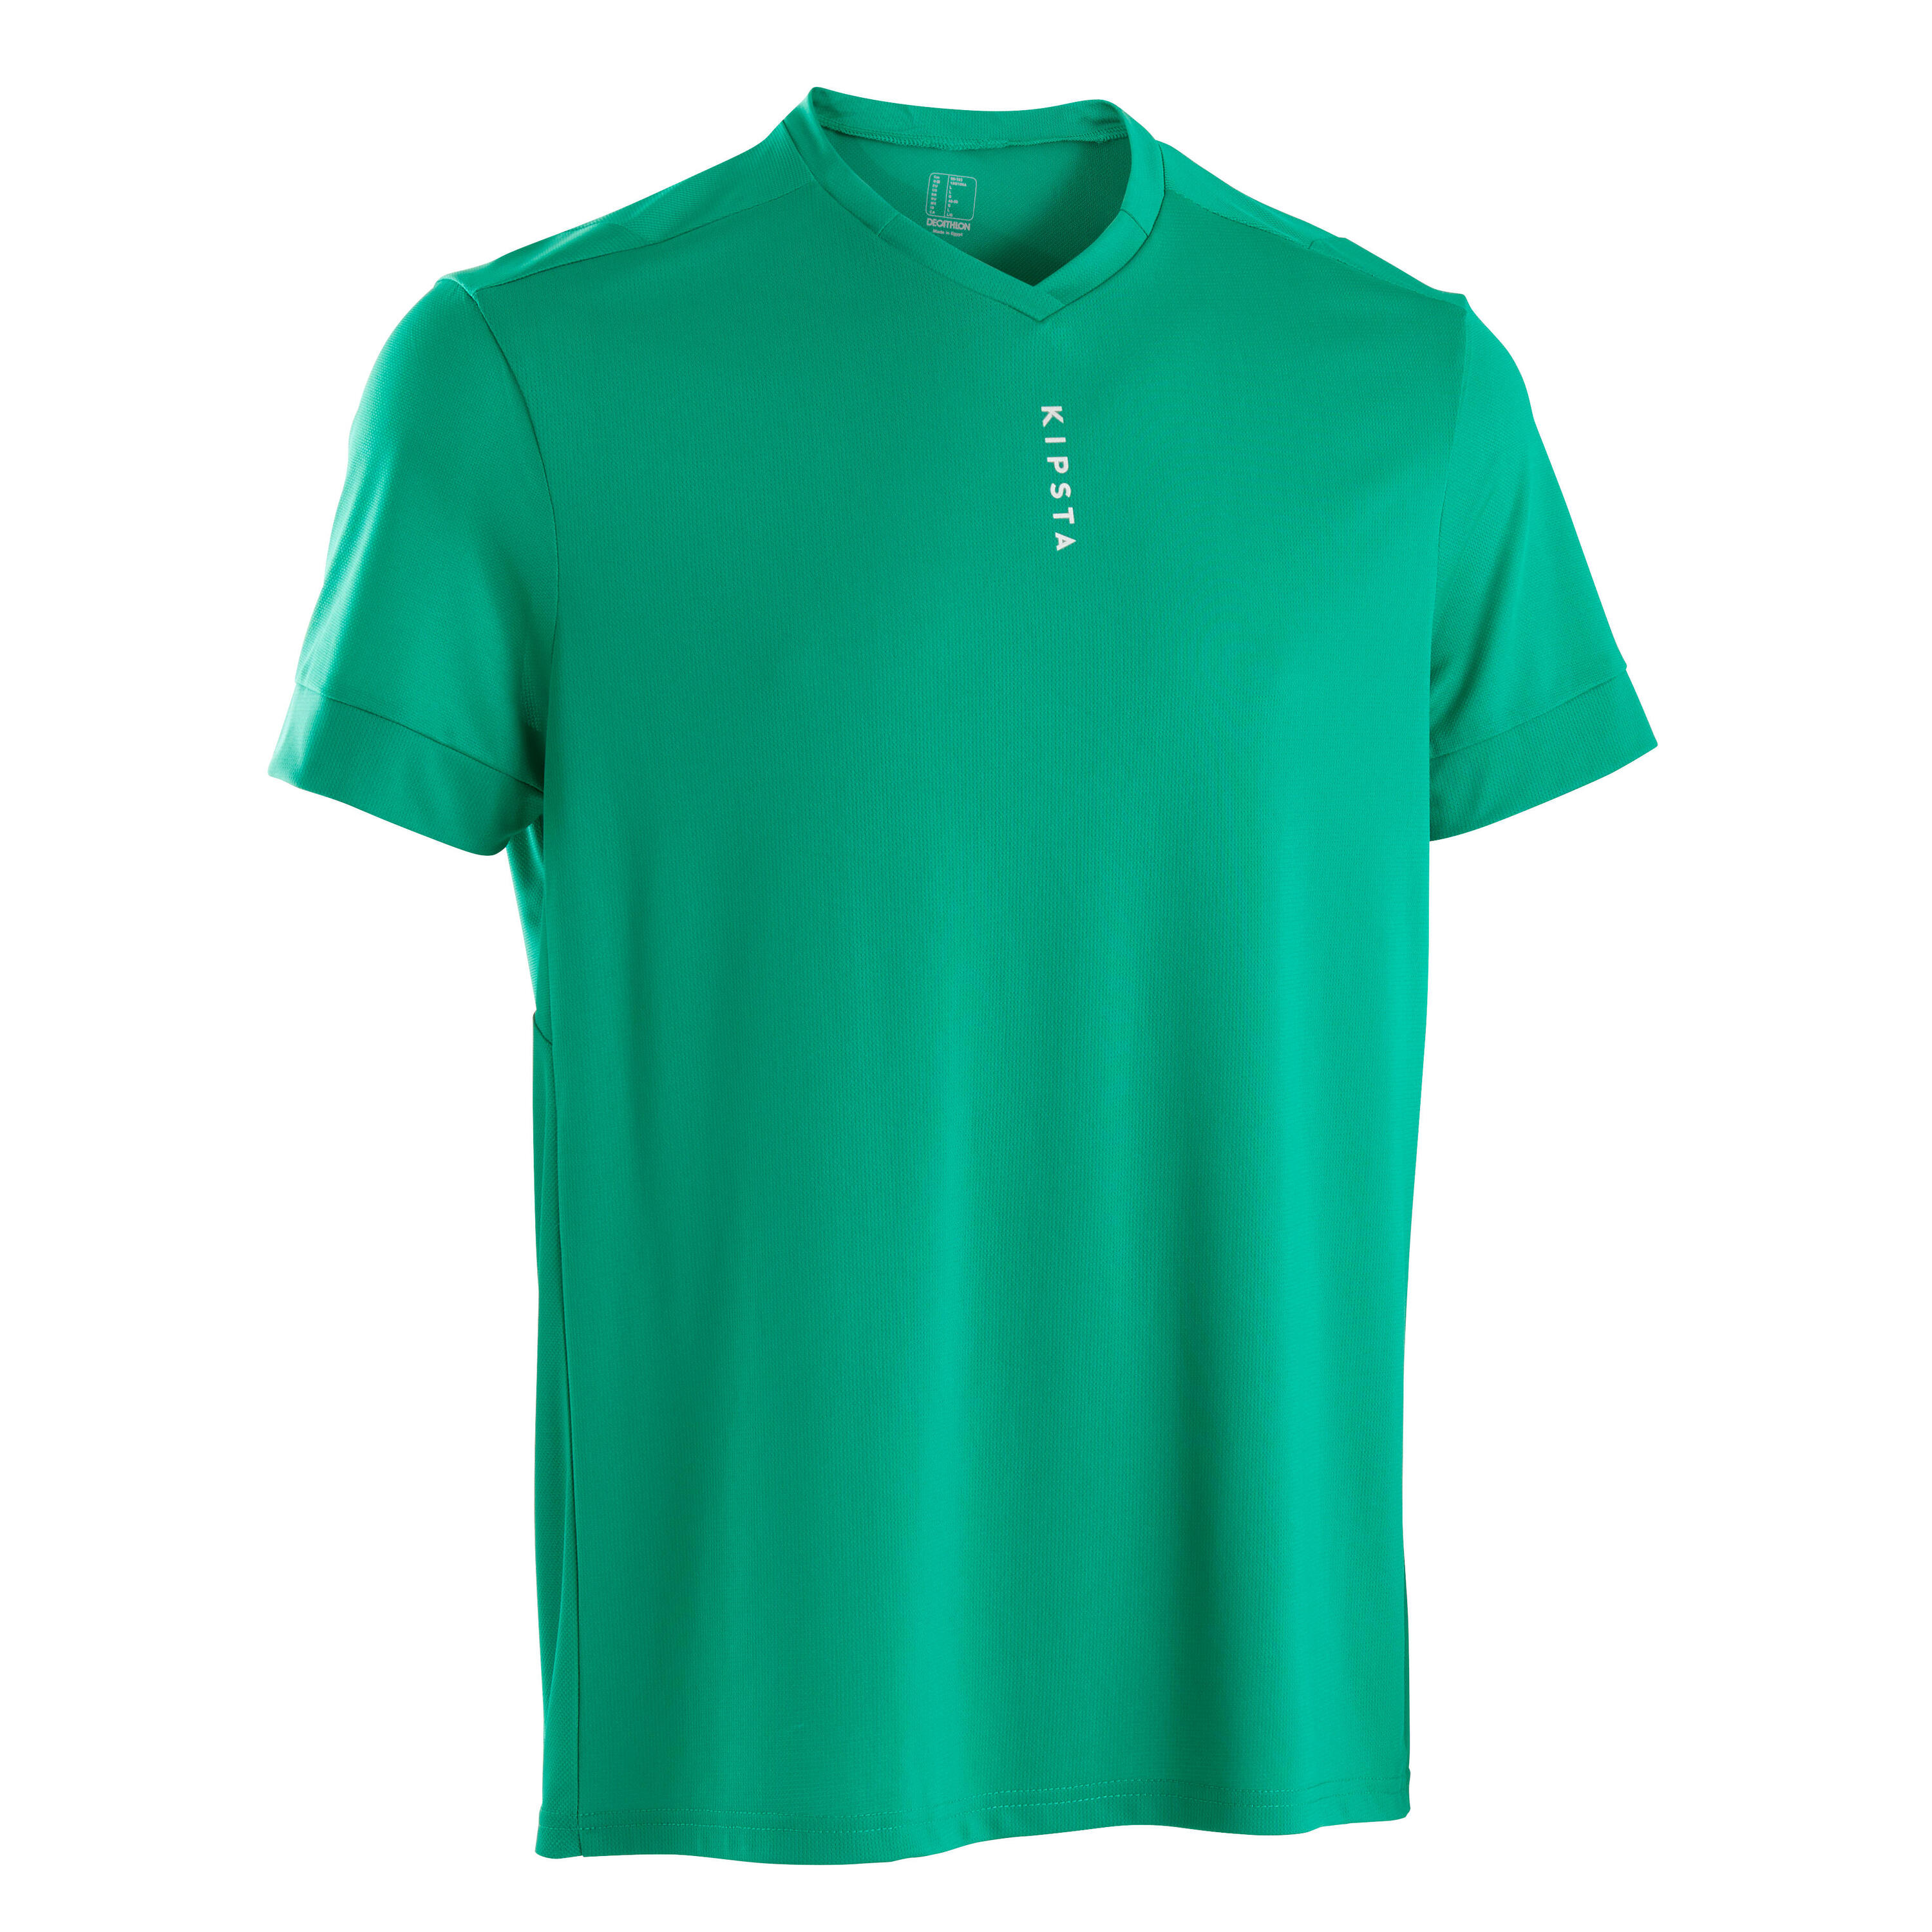 KIPSTA Adult Football Shirt F500 - Plain Green